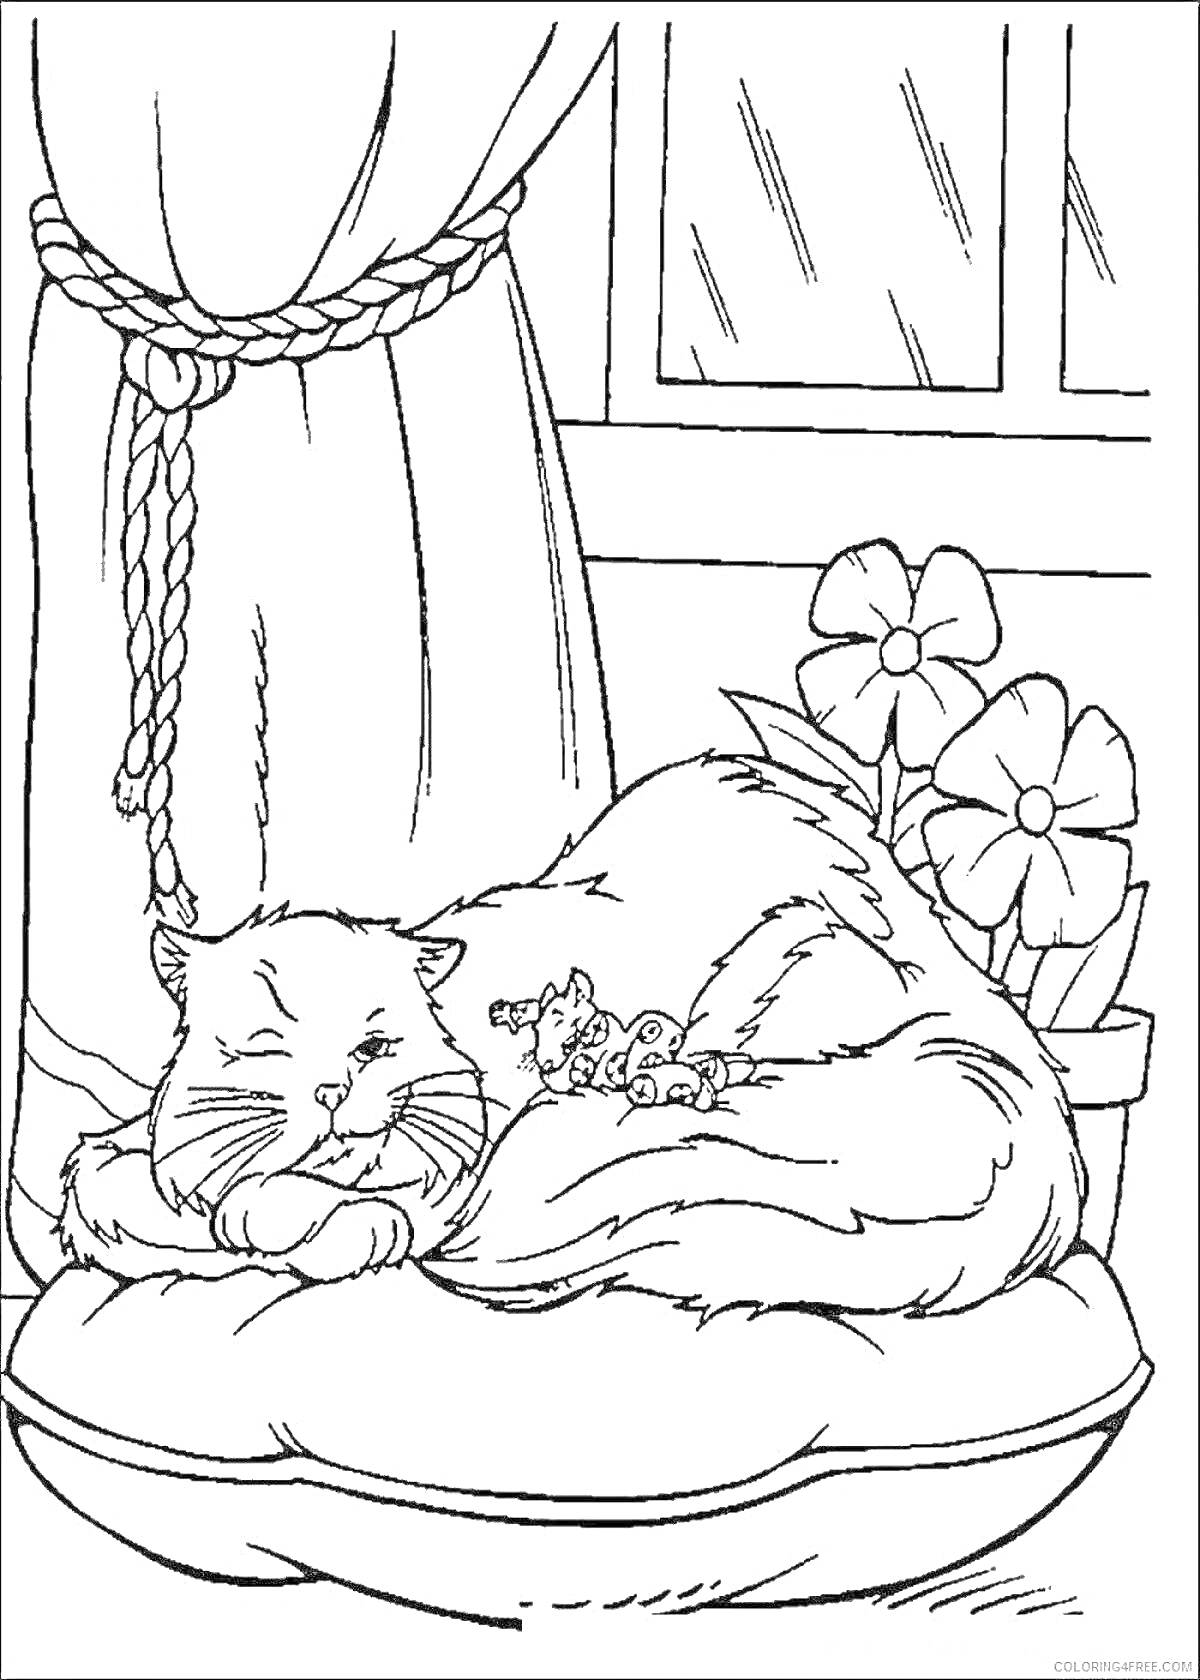 Раскраска Кошка спит на подушке, окно с занавеской, цветы в вазоне